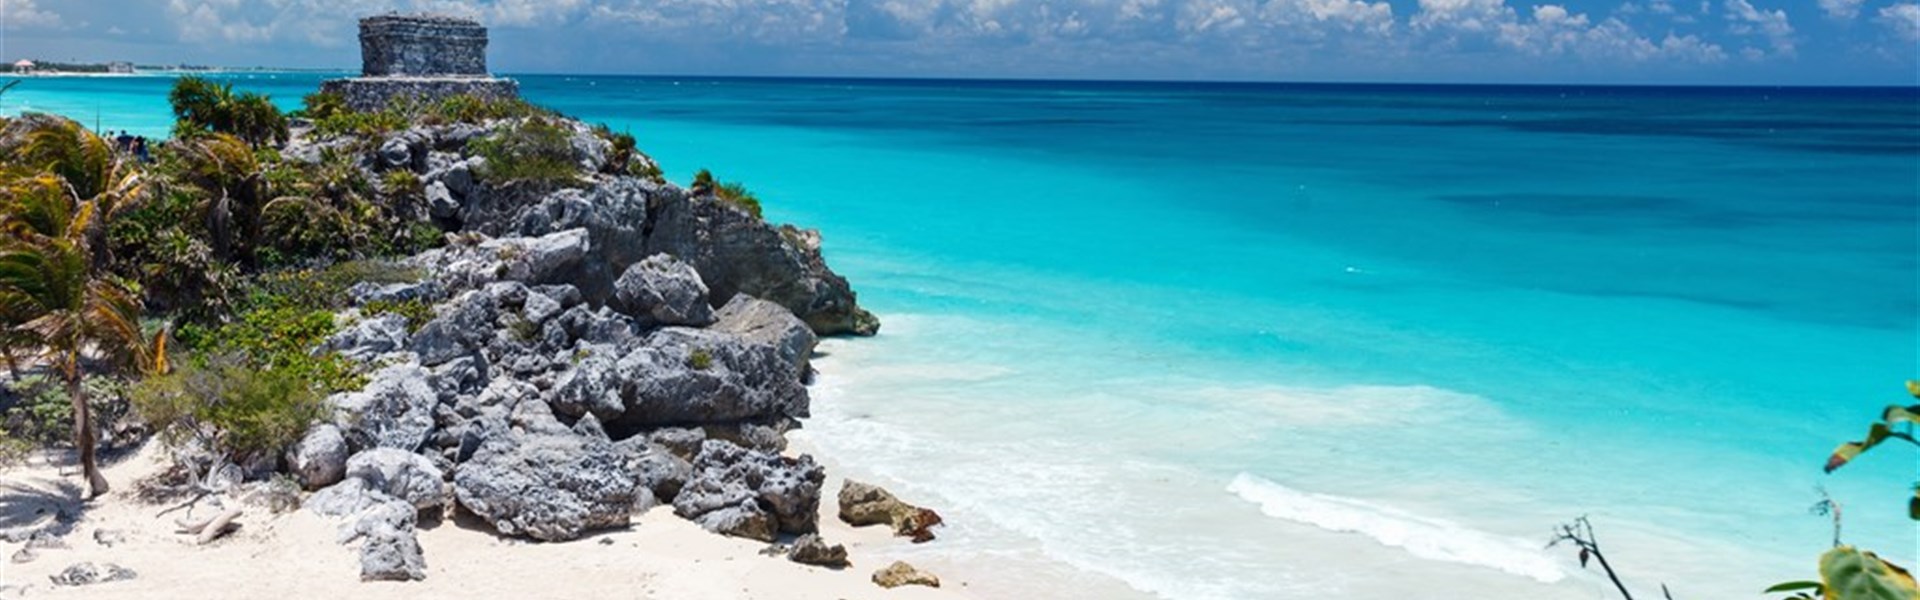 Krásy Yucatánu a Chiapasu - prodloužený okruh s průvodcem - 